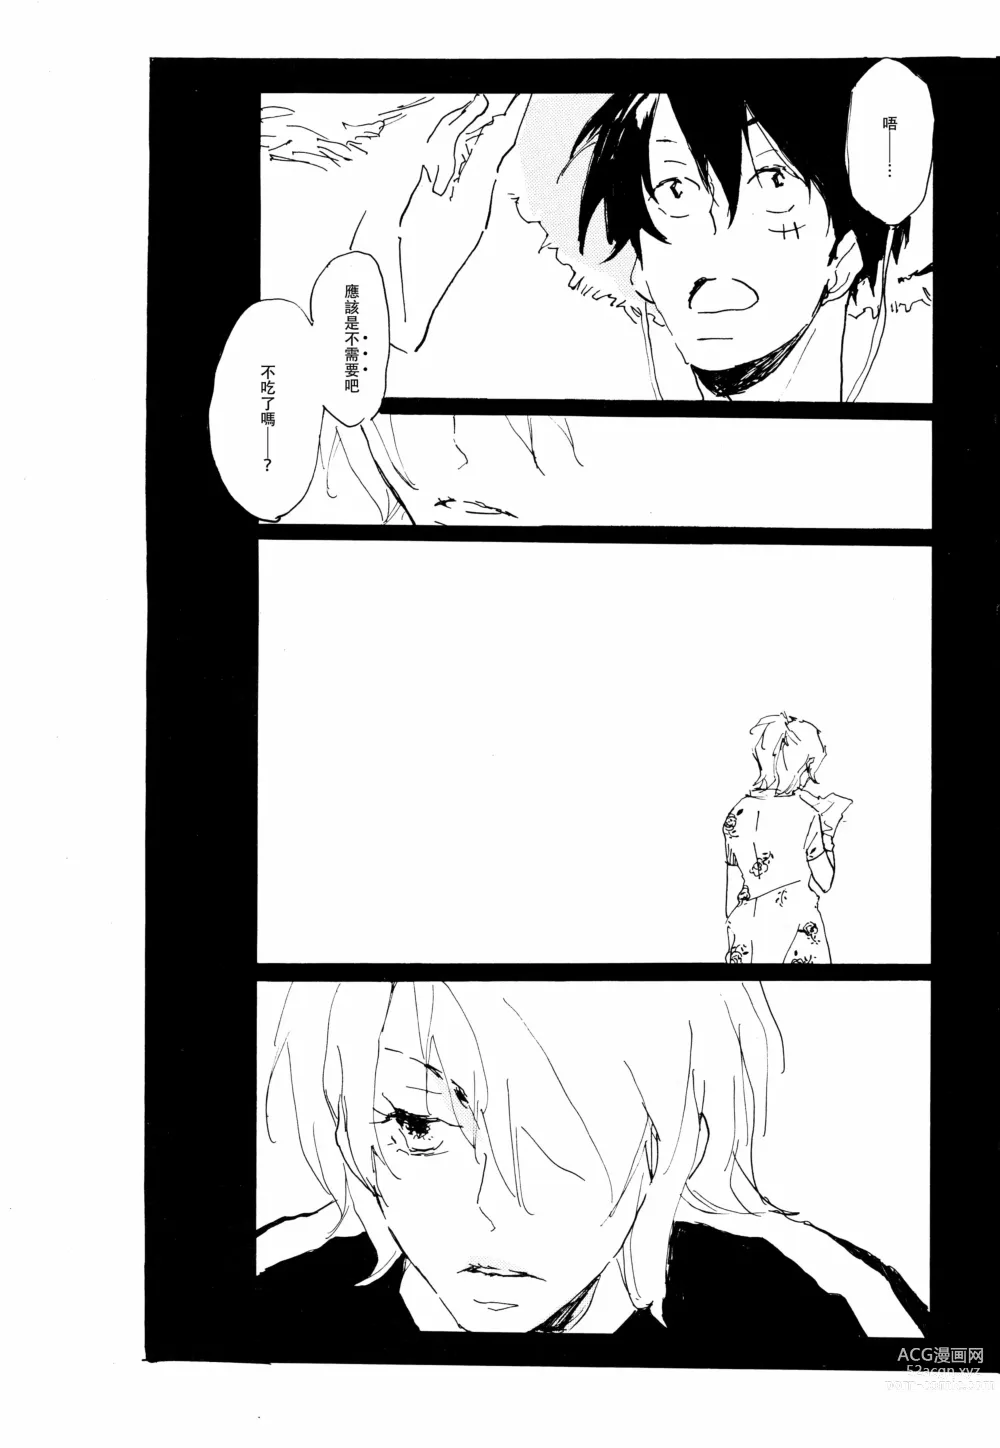 Page 26 of doujinshi 忧郁·与那份没有尽头的悲伤